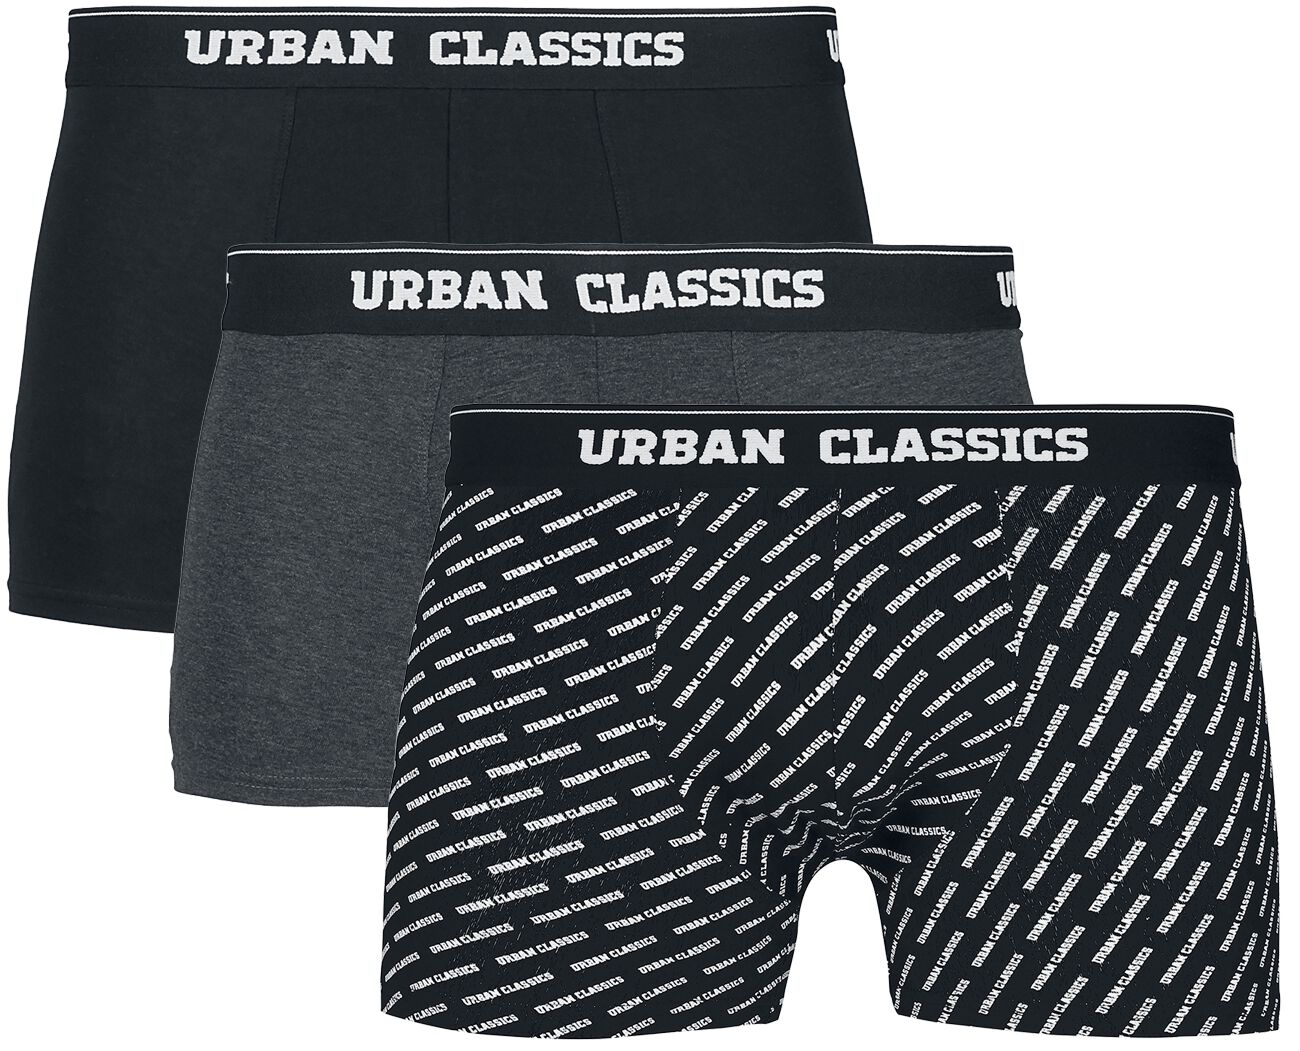 Urban Classics Boxer Shorts 3-Pack Boxers Set white black grey